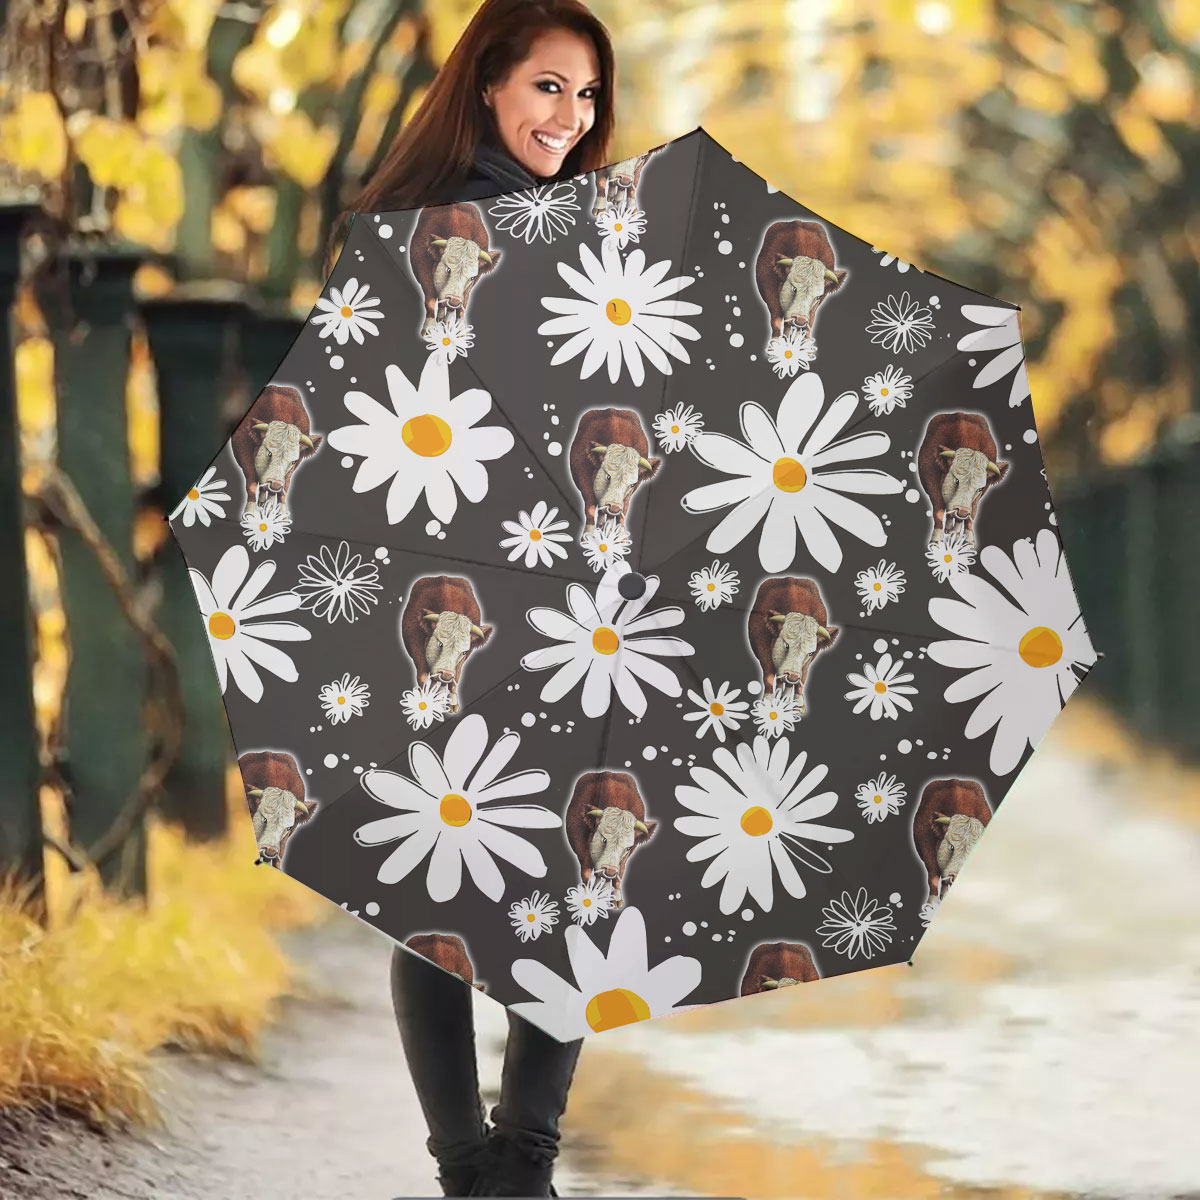 Hereford Daisy Flower Pattern Umbrella